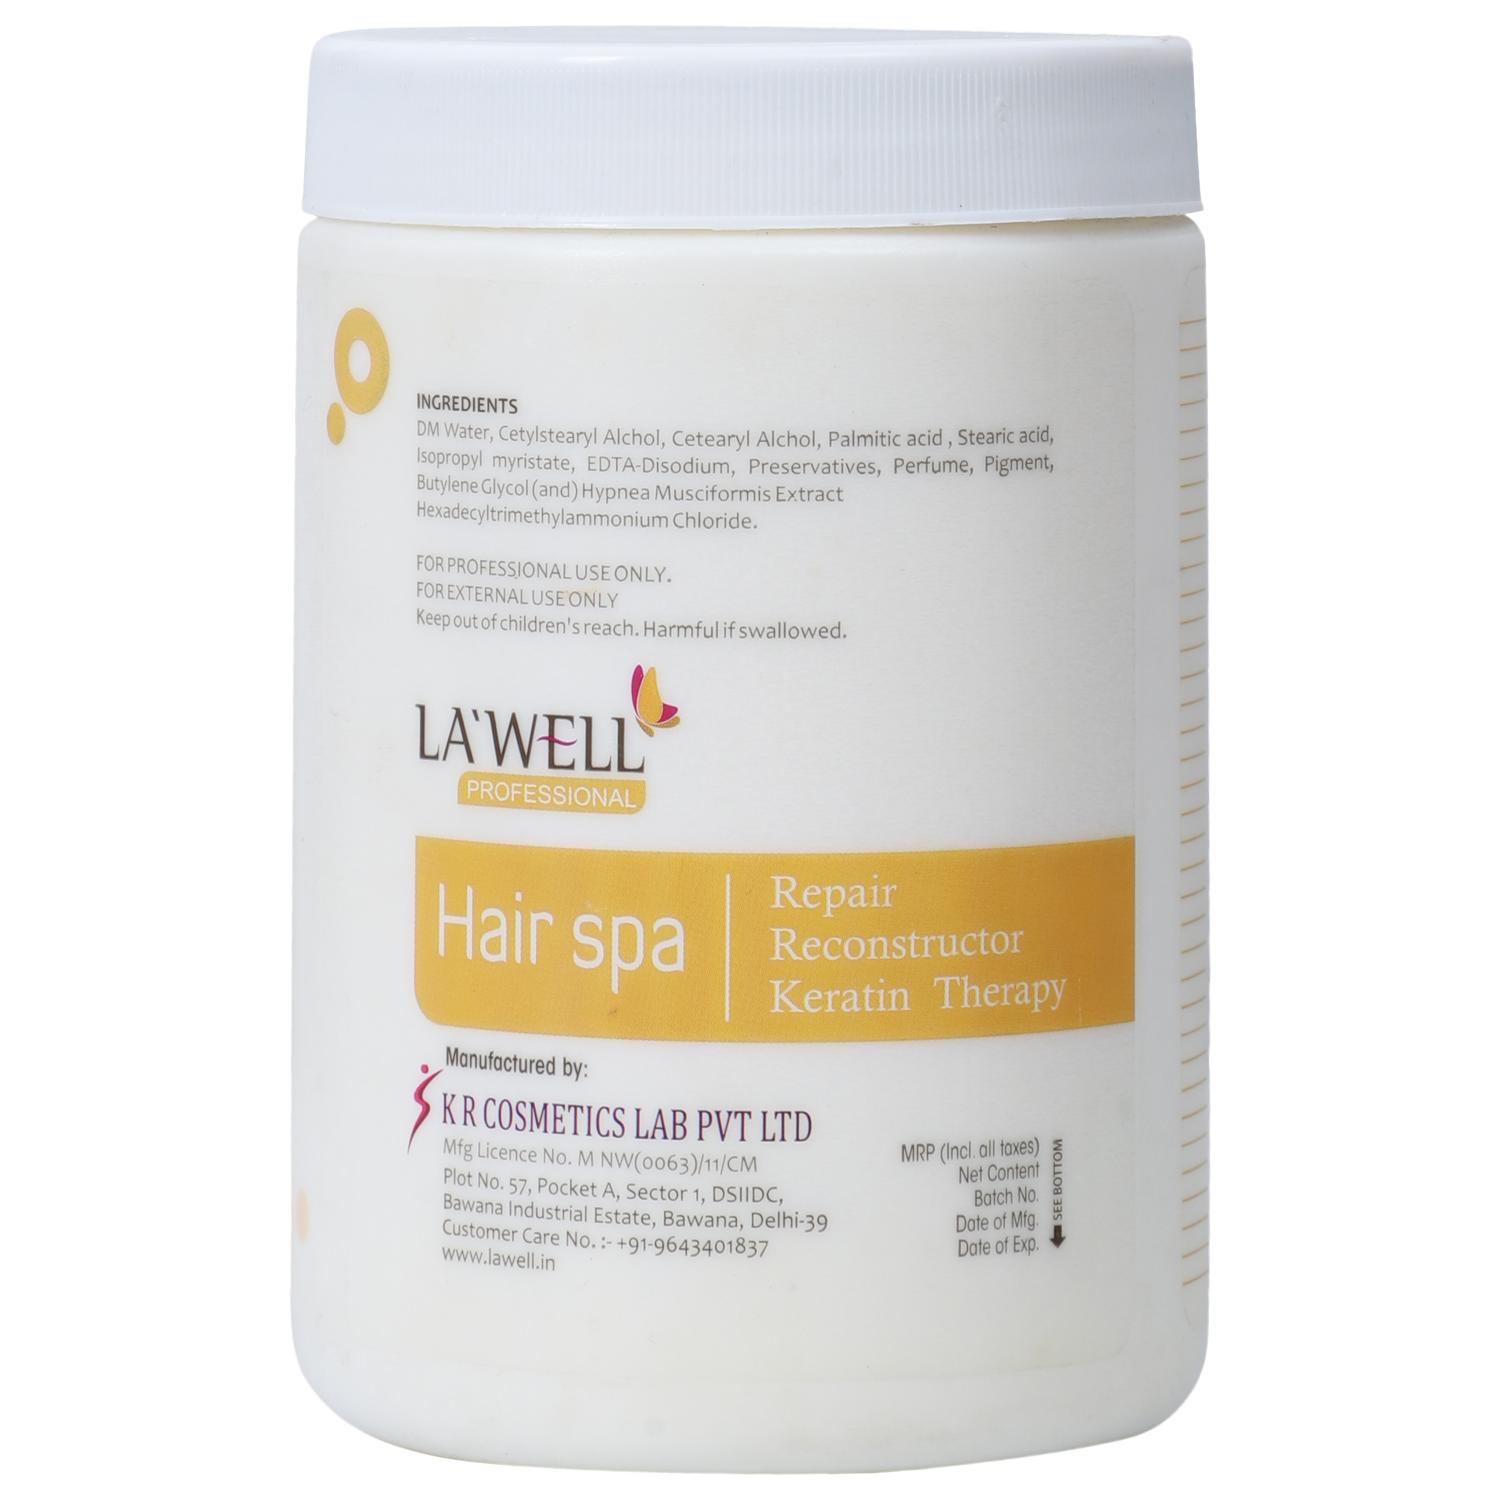 La well Hair spa Repair  770ml 